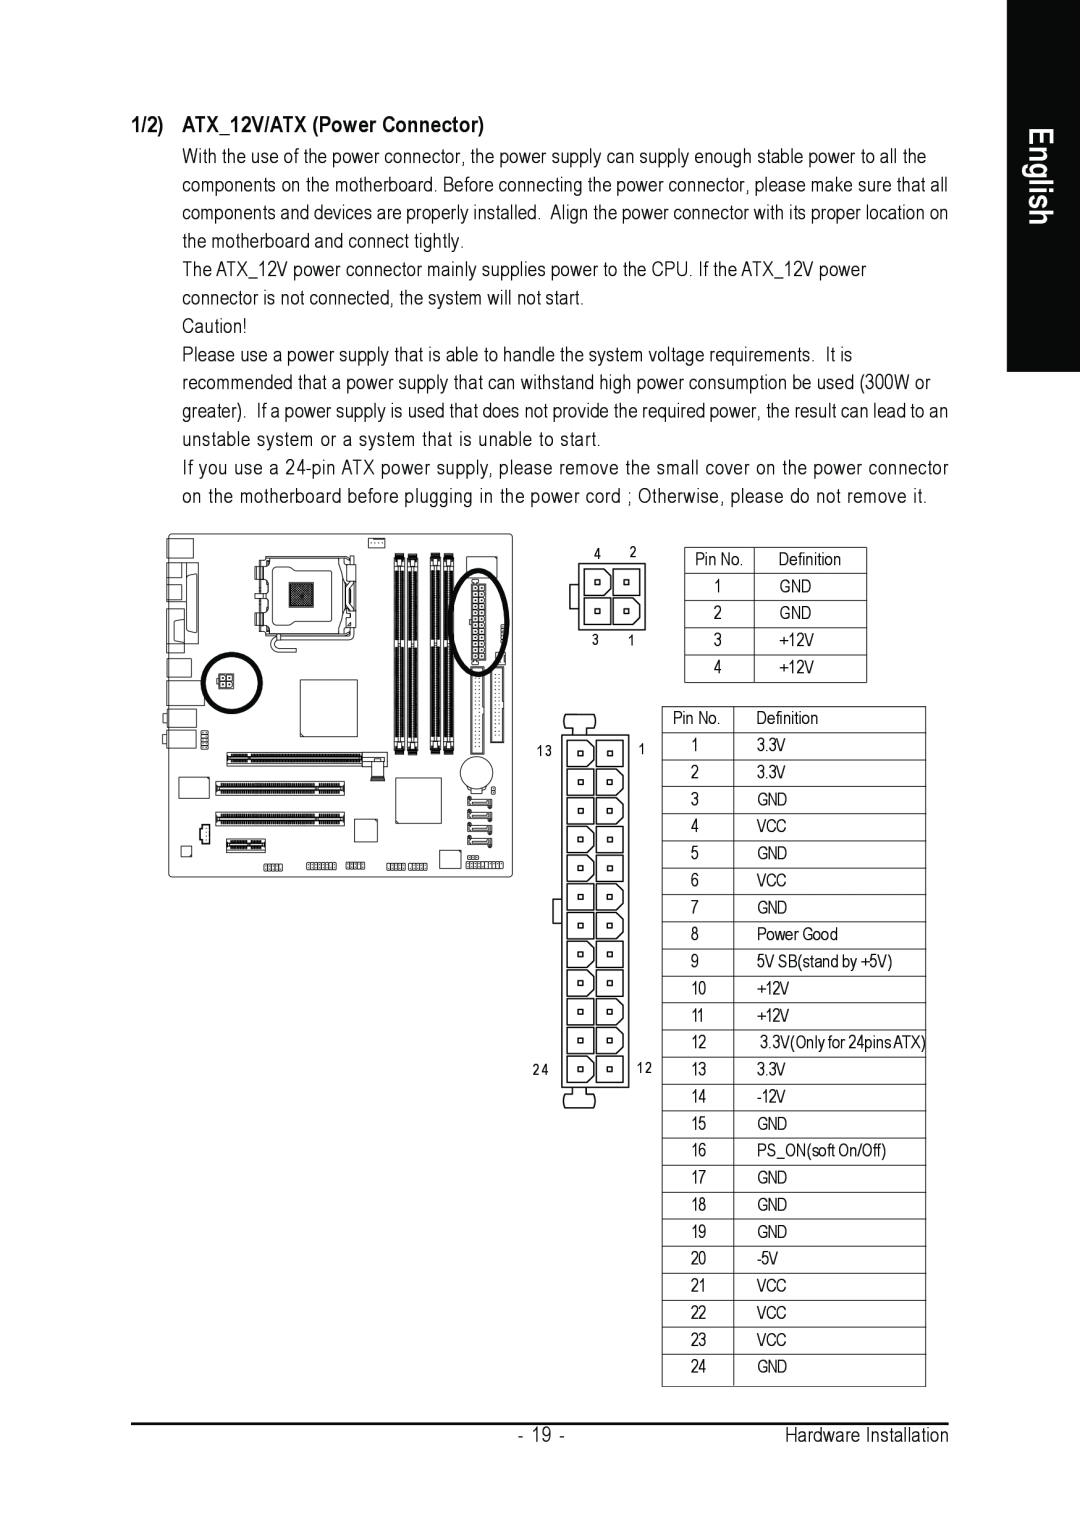 Gigabyte GA-8I915P-MF user manual 1/2 ATX12V/ATX Power Connector, English, 3.3VOnly for 24pins ATX 